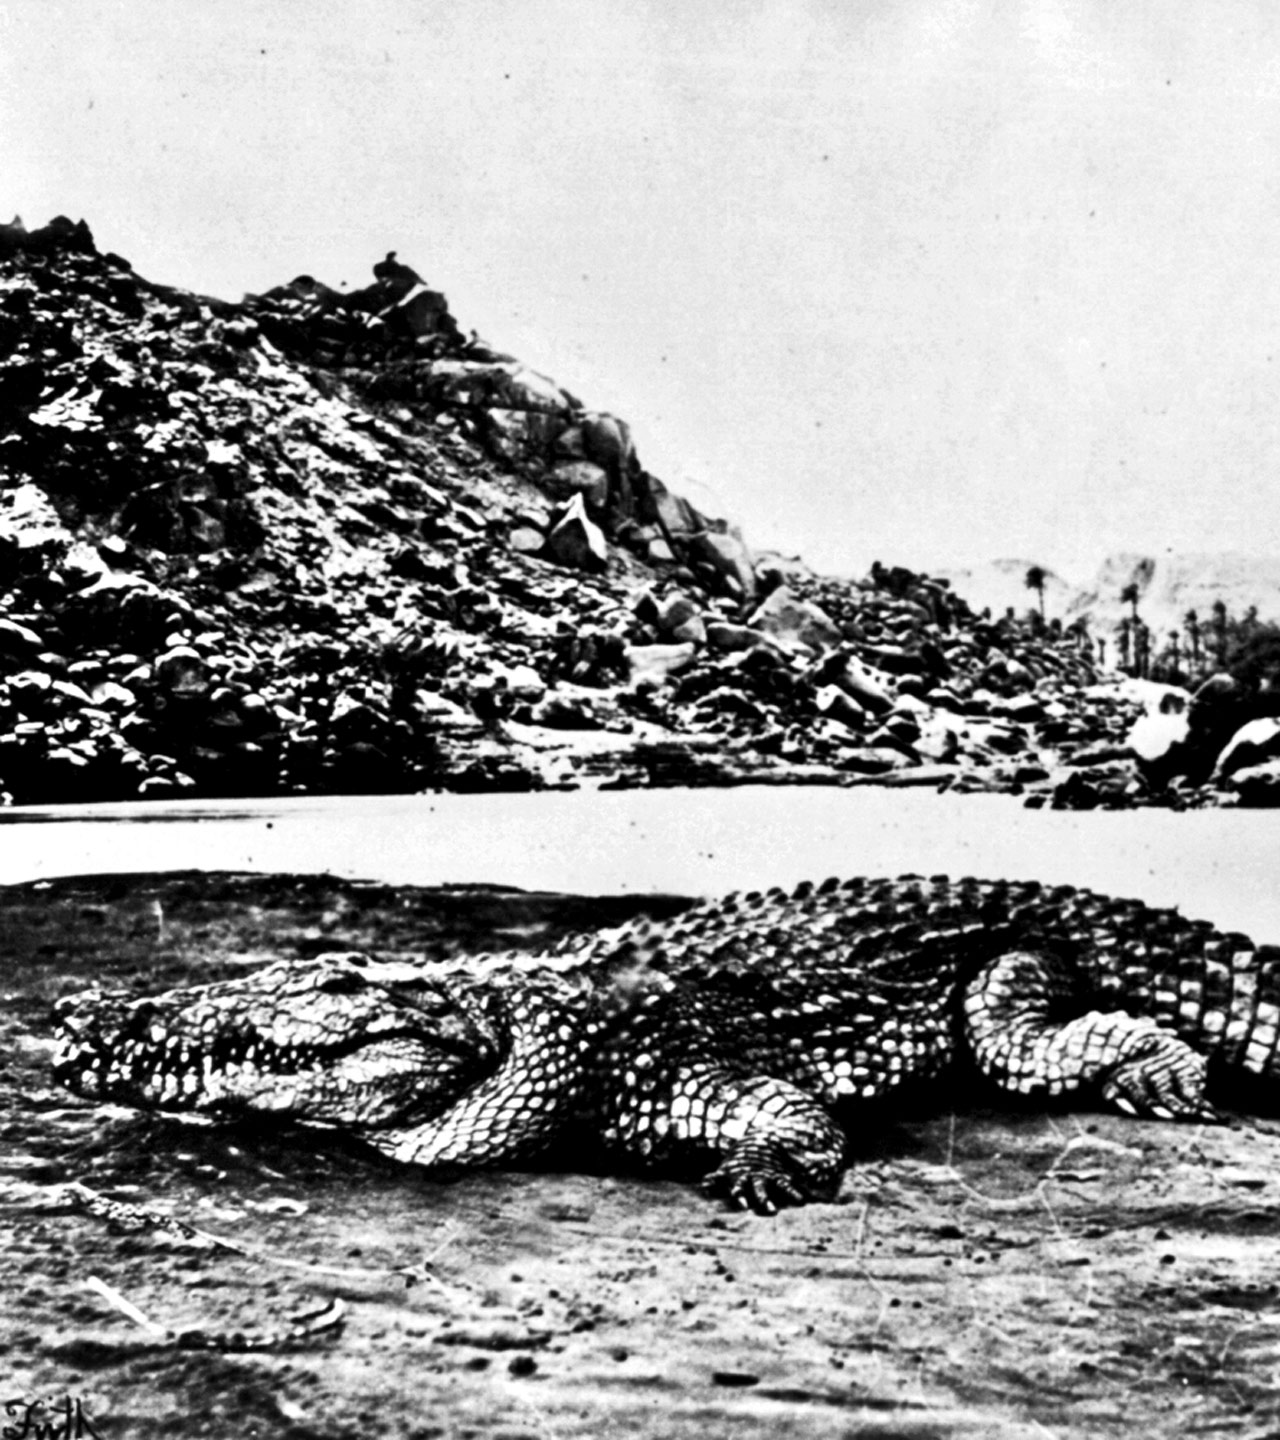 Crocodile on a sand bank